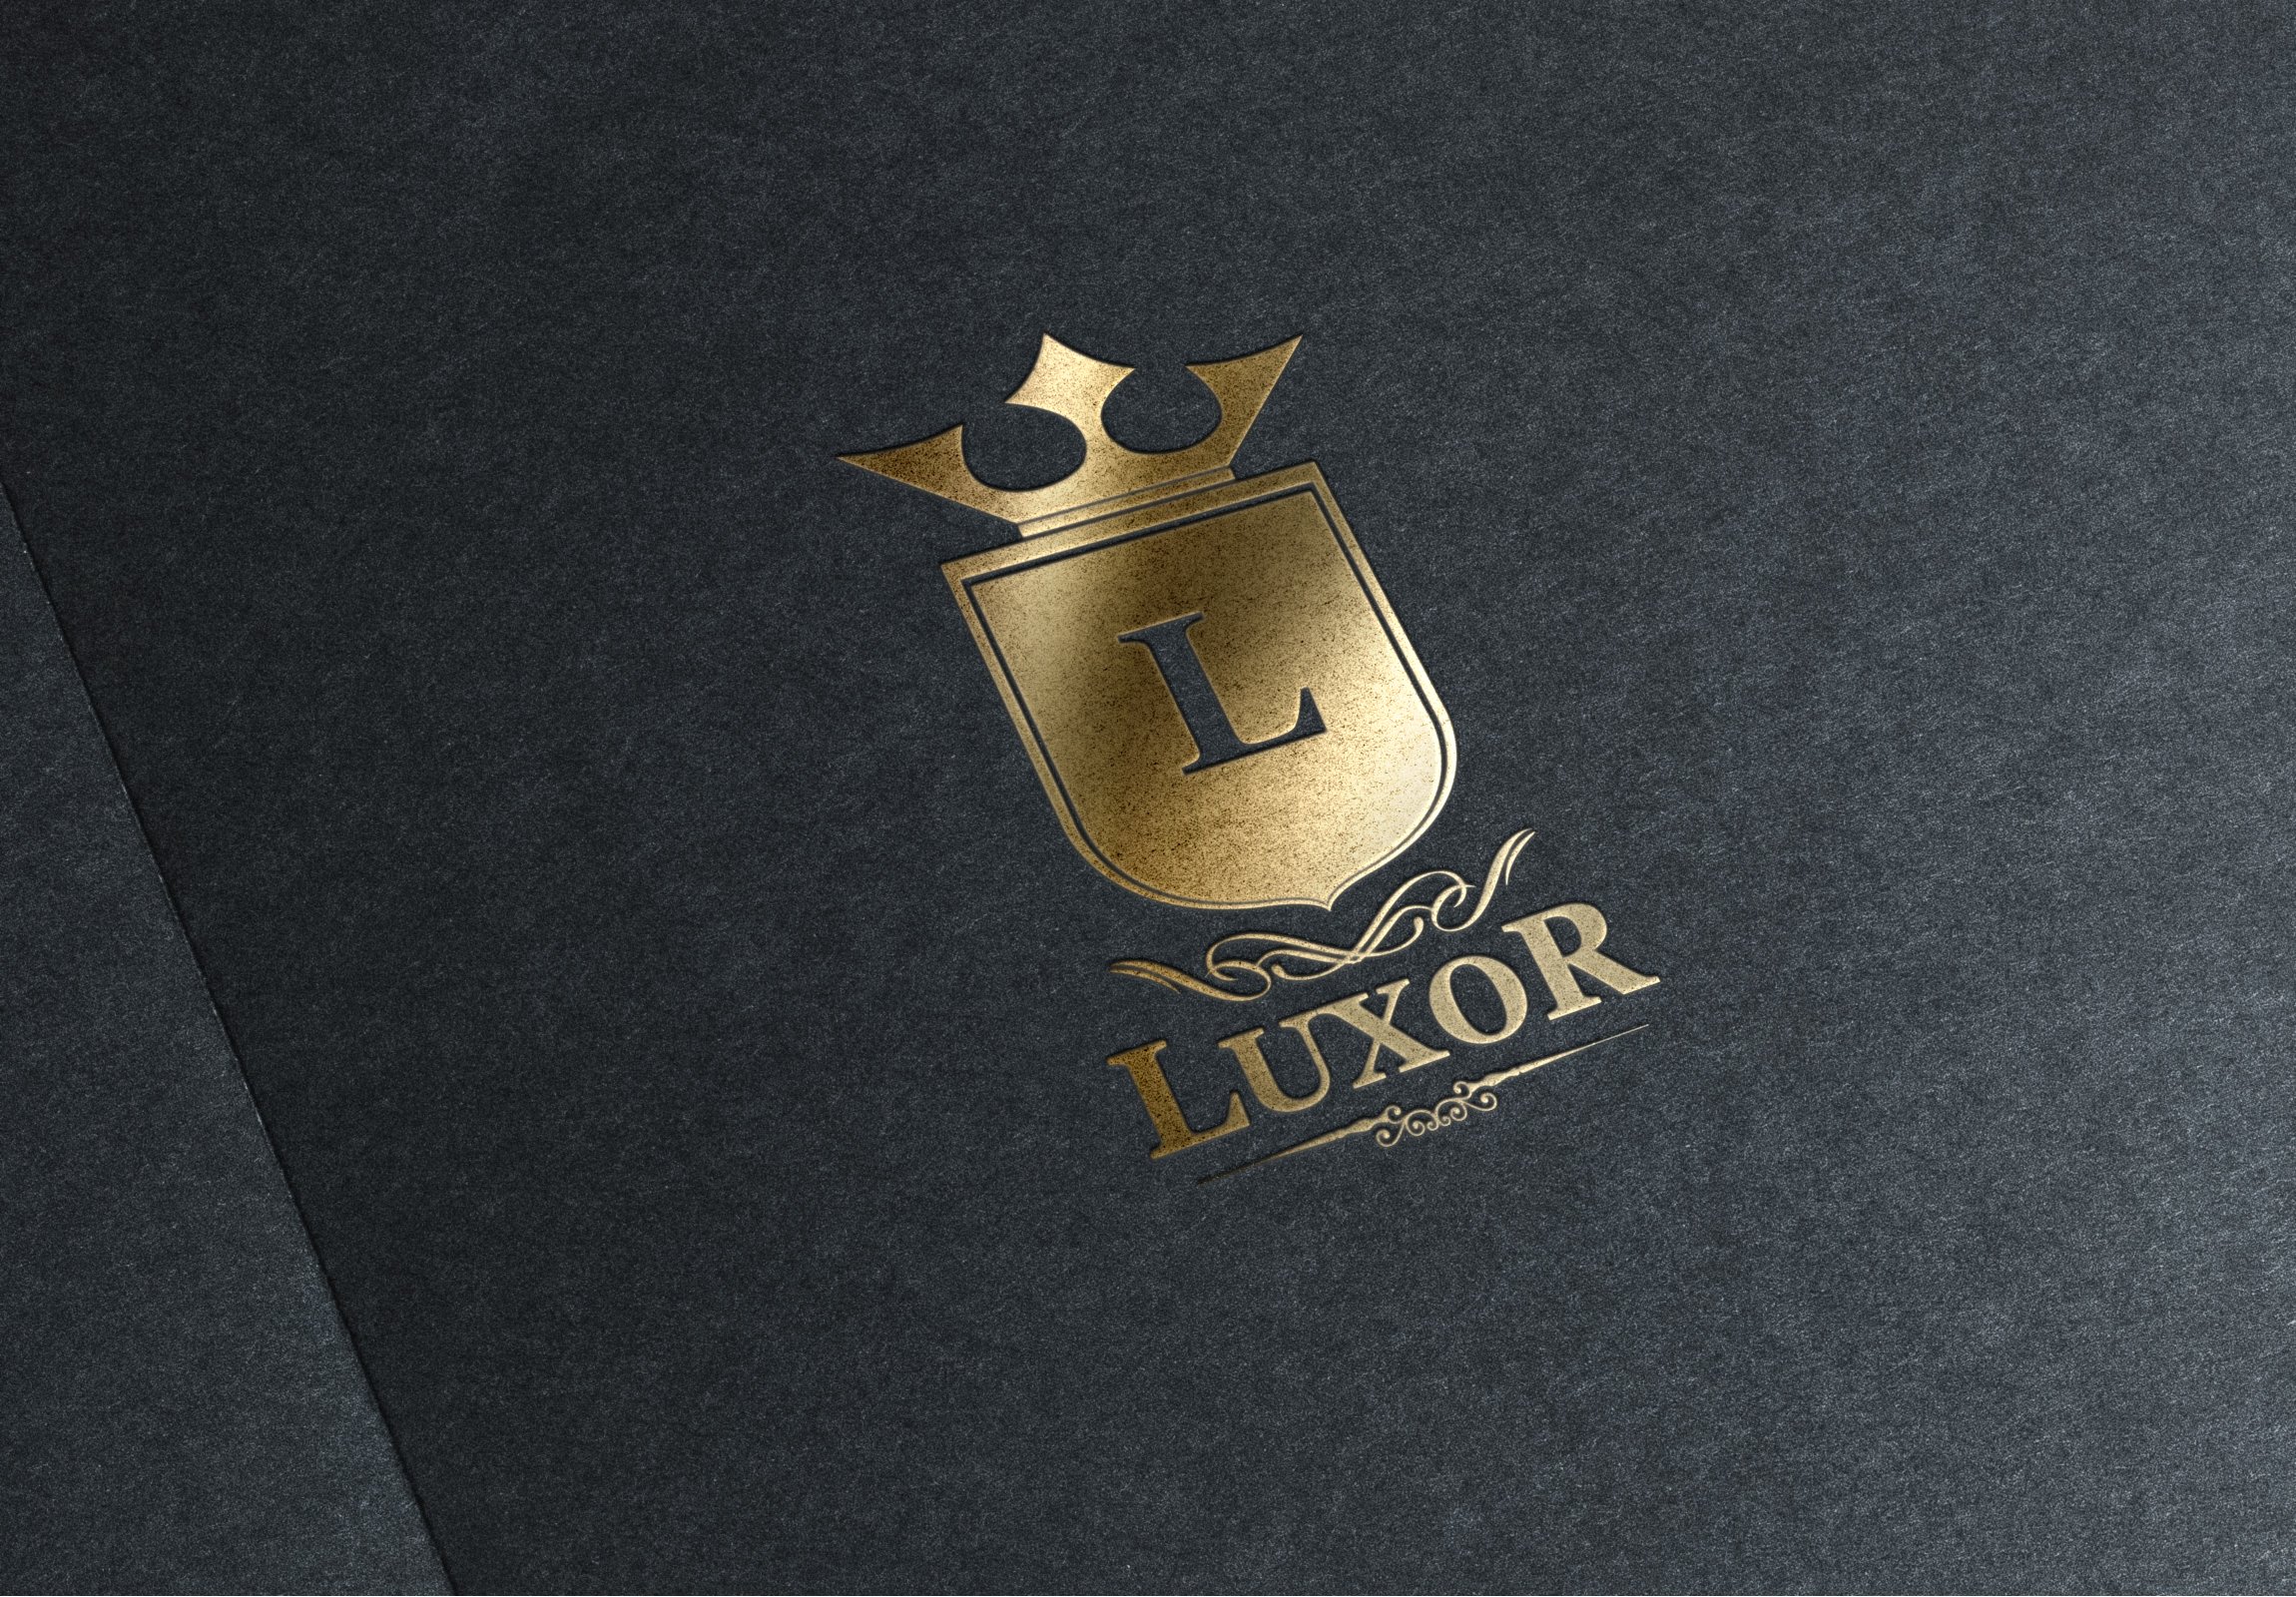 高端奢华的logo模板 Luxor Logo #17028